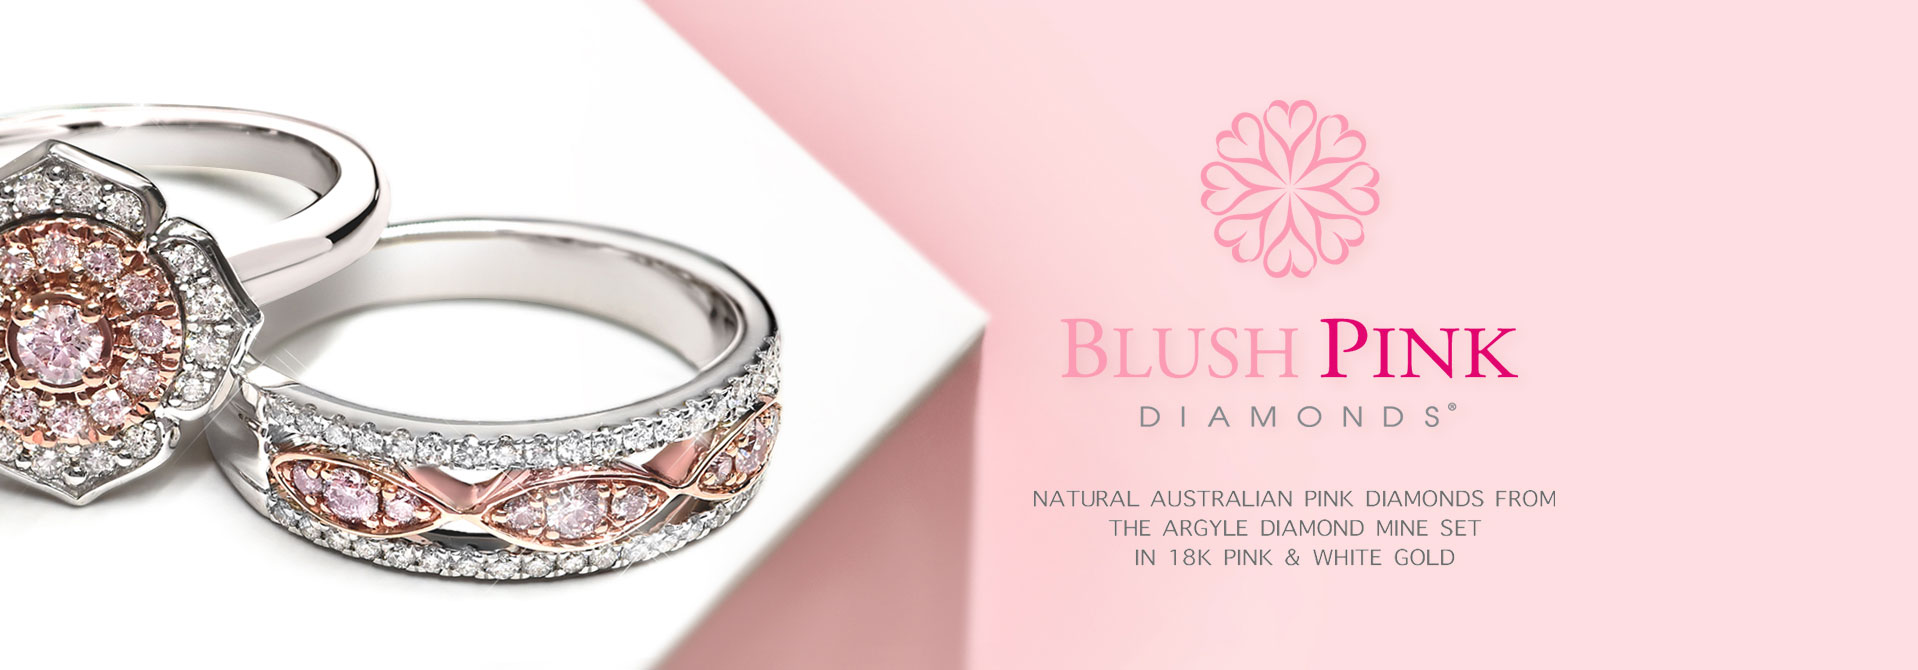 Blush Pink Diamonds fro the Argyle diamond mine set in 18K pink and white gold